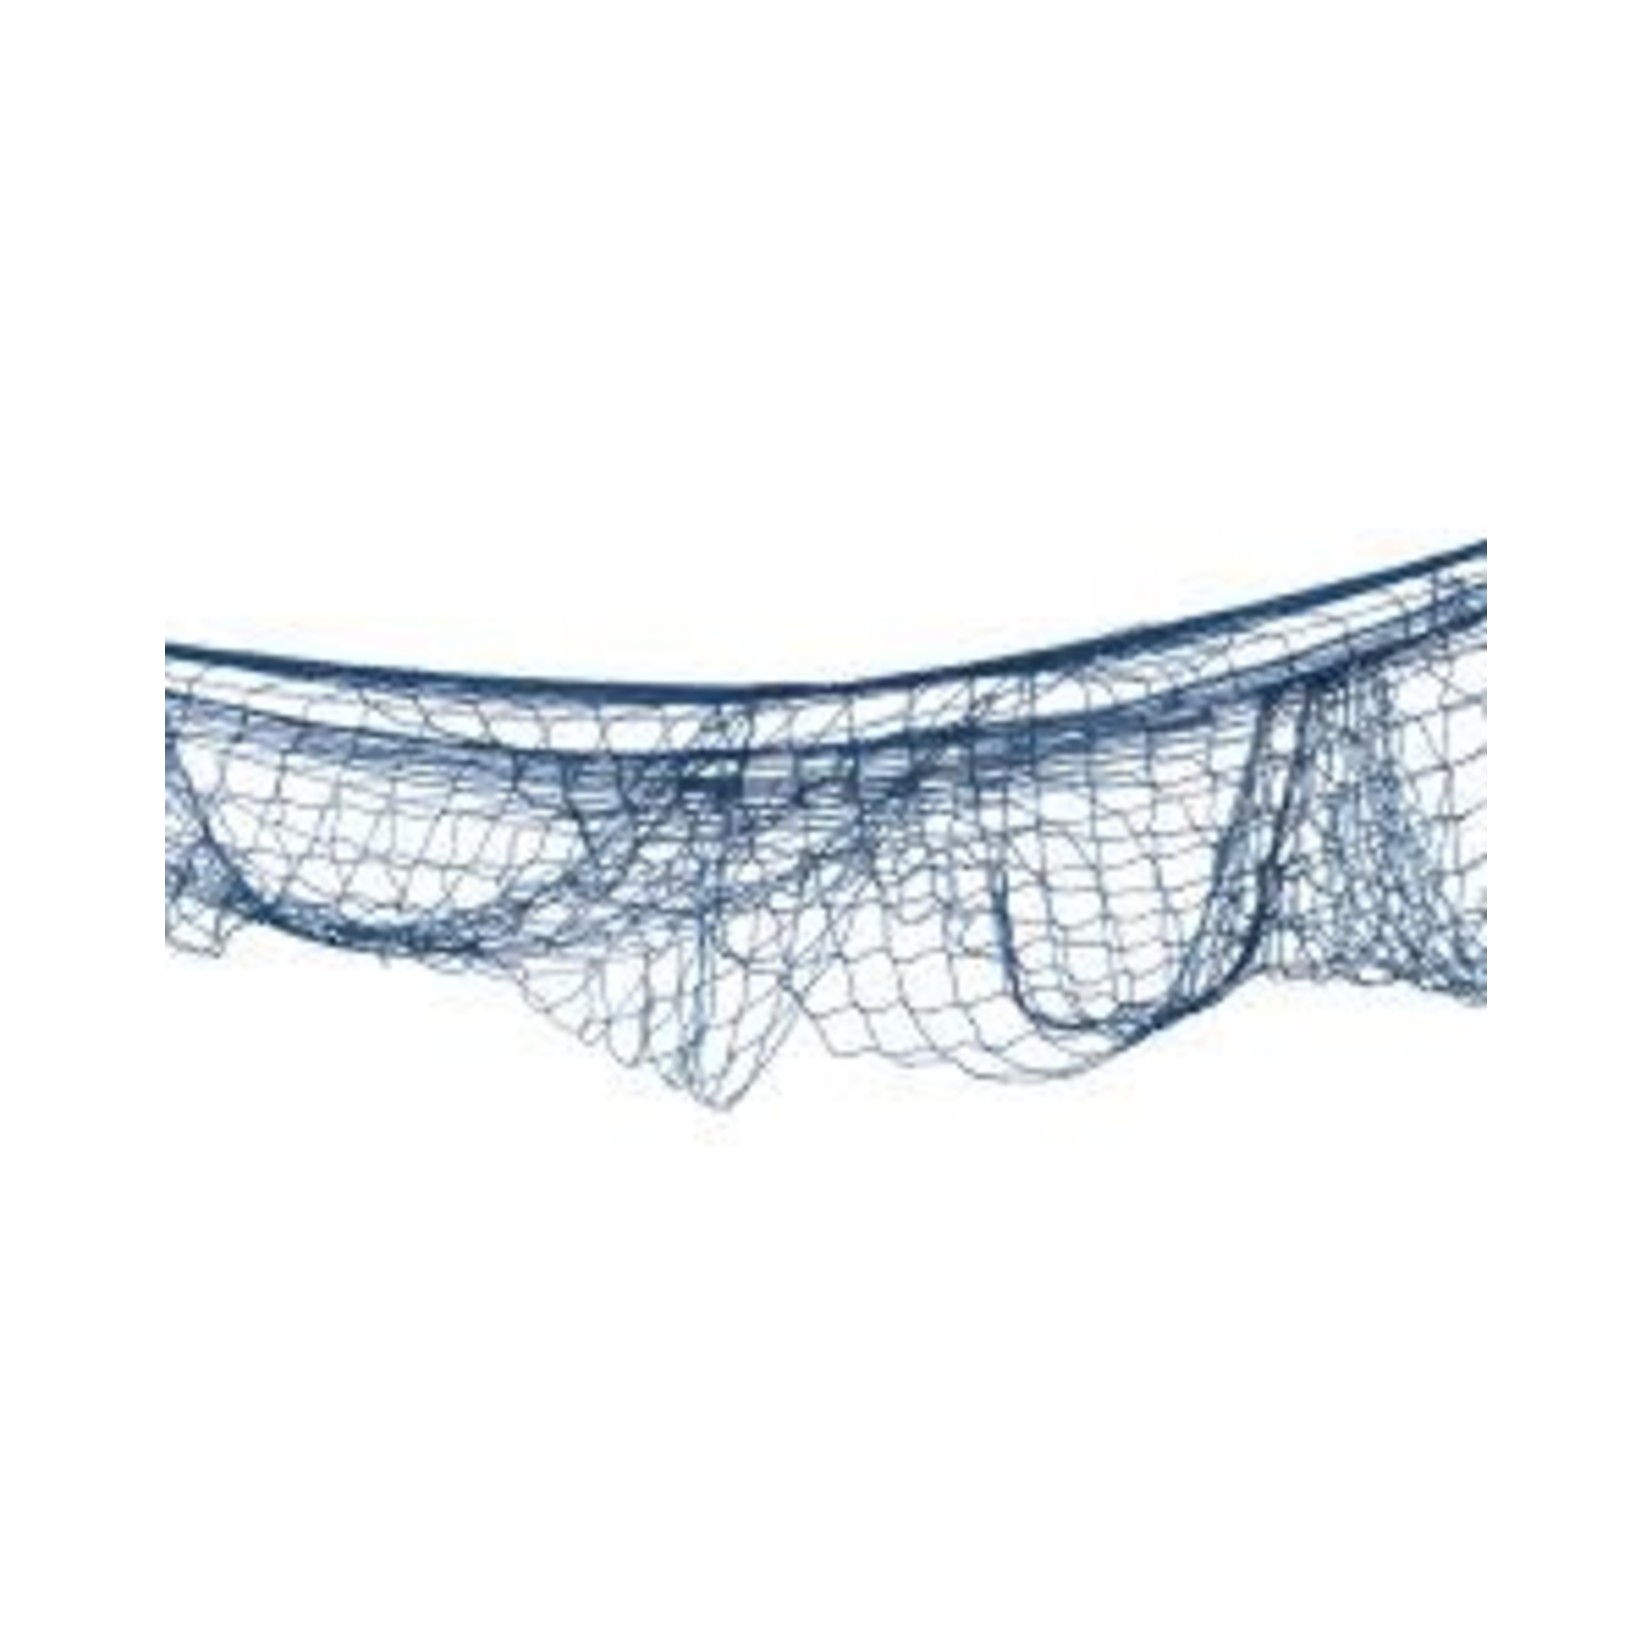 Beistle Blue Fish Netting - 4' x 12'